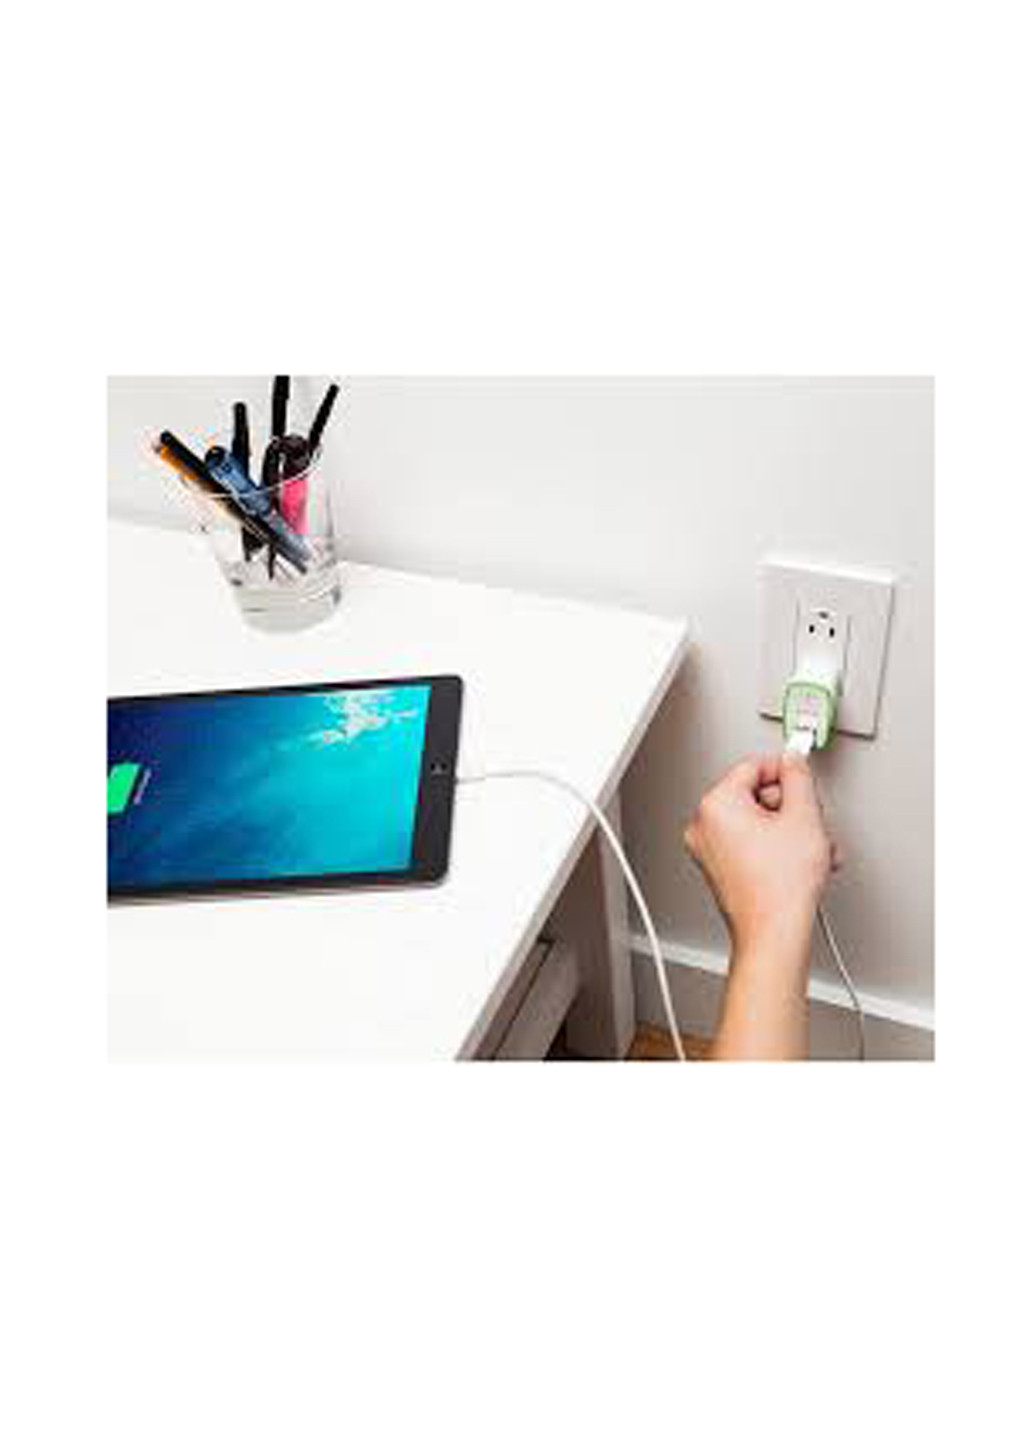 Сетевое ЗУ Belkin USB Home Charger (2.4Amp) c кабелем Lightening to USB-A, 1.2m, Wht (F8J125vf04-WHT) белое